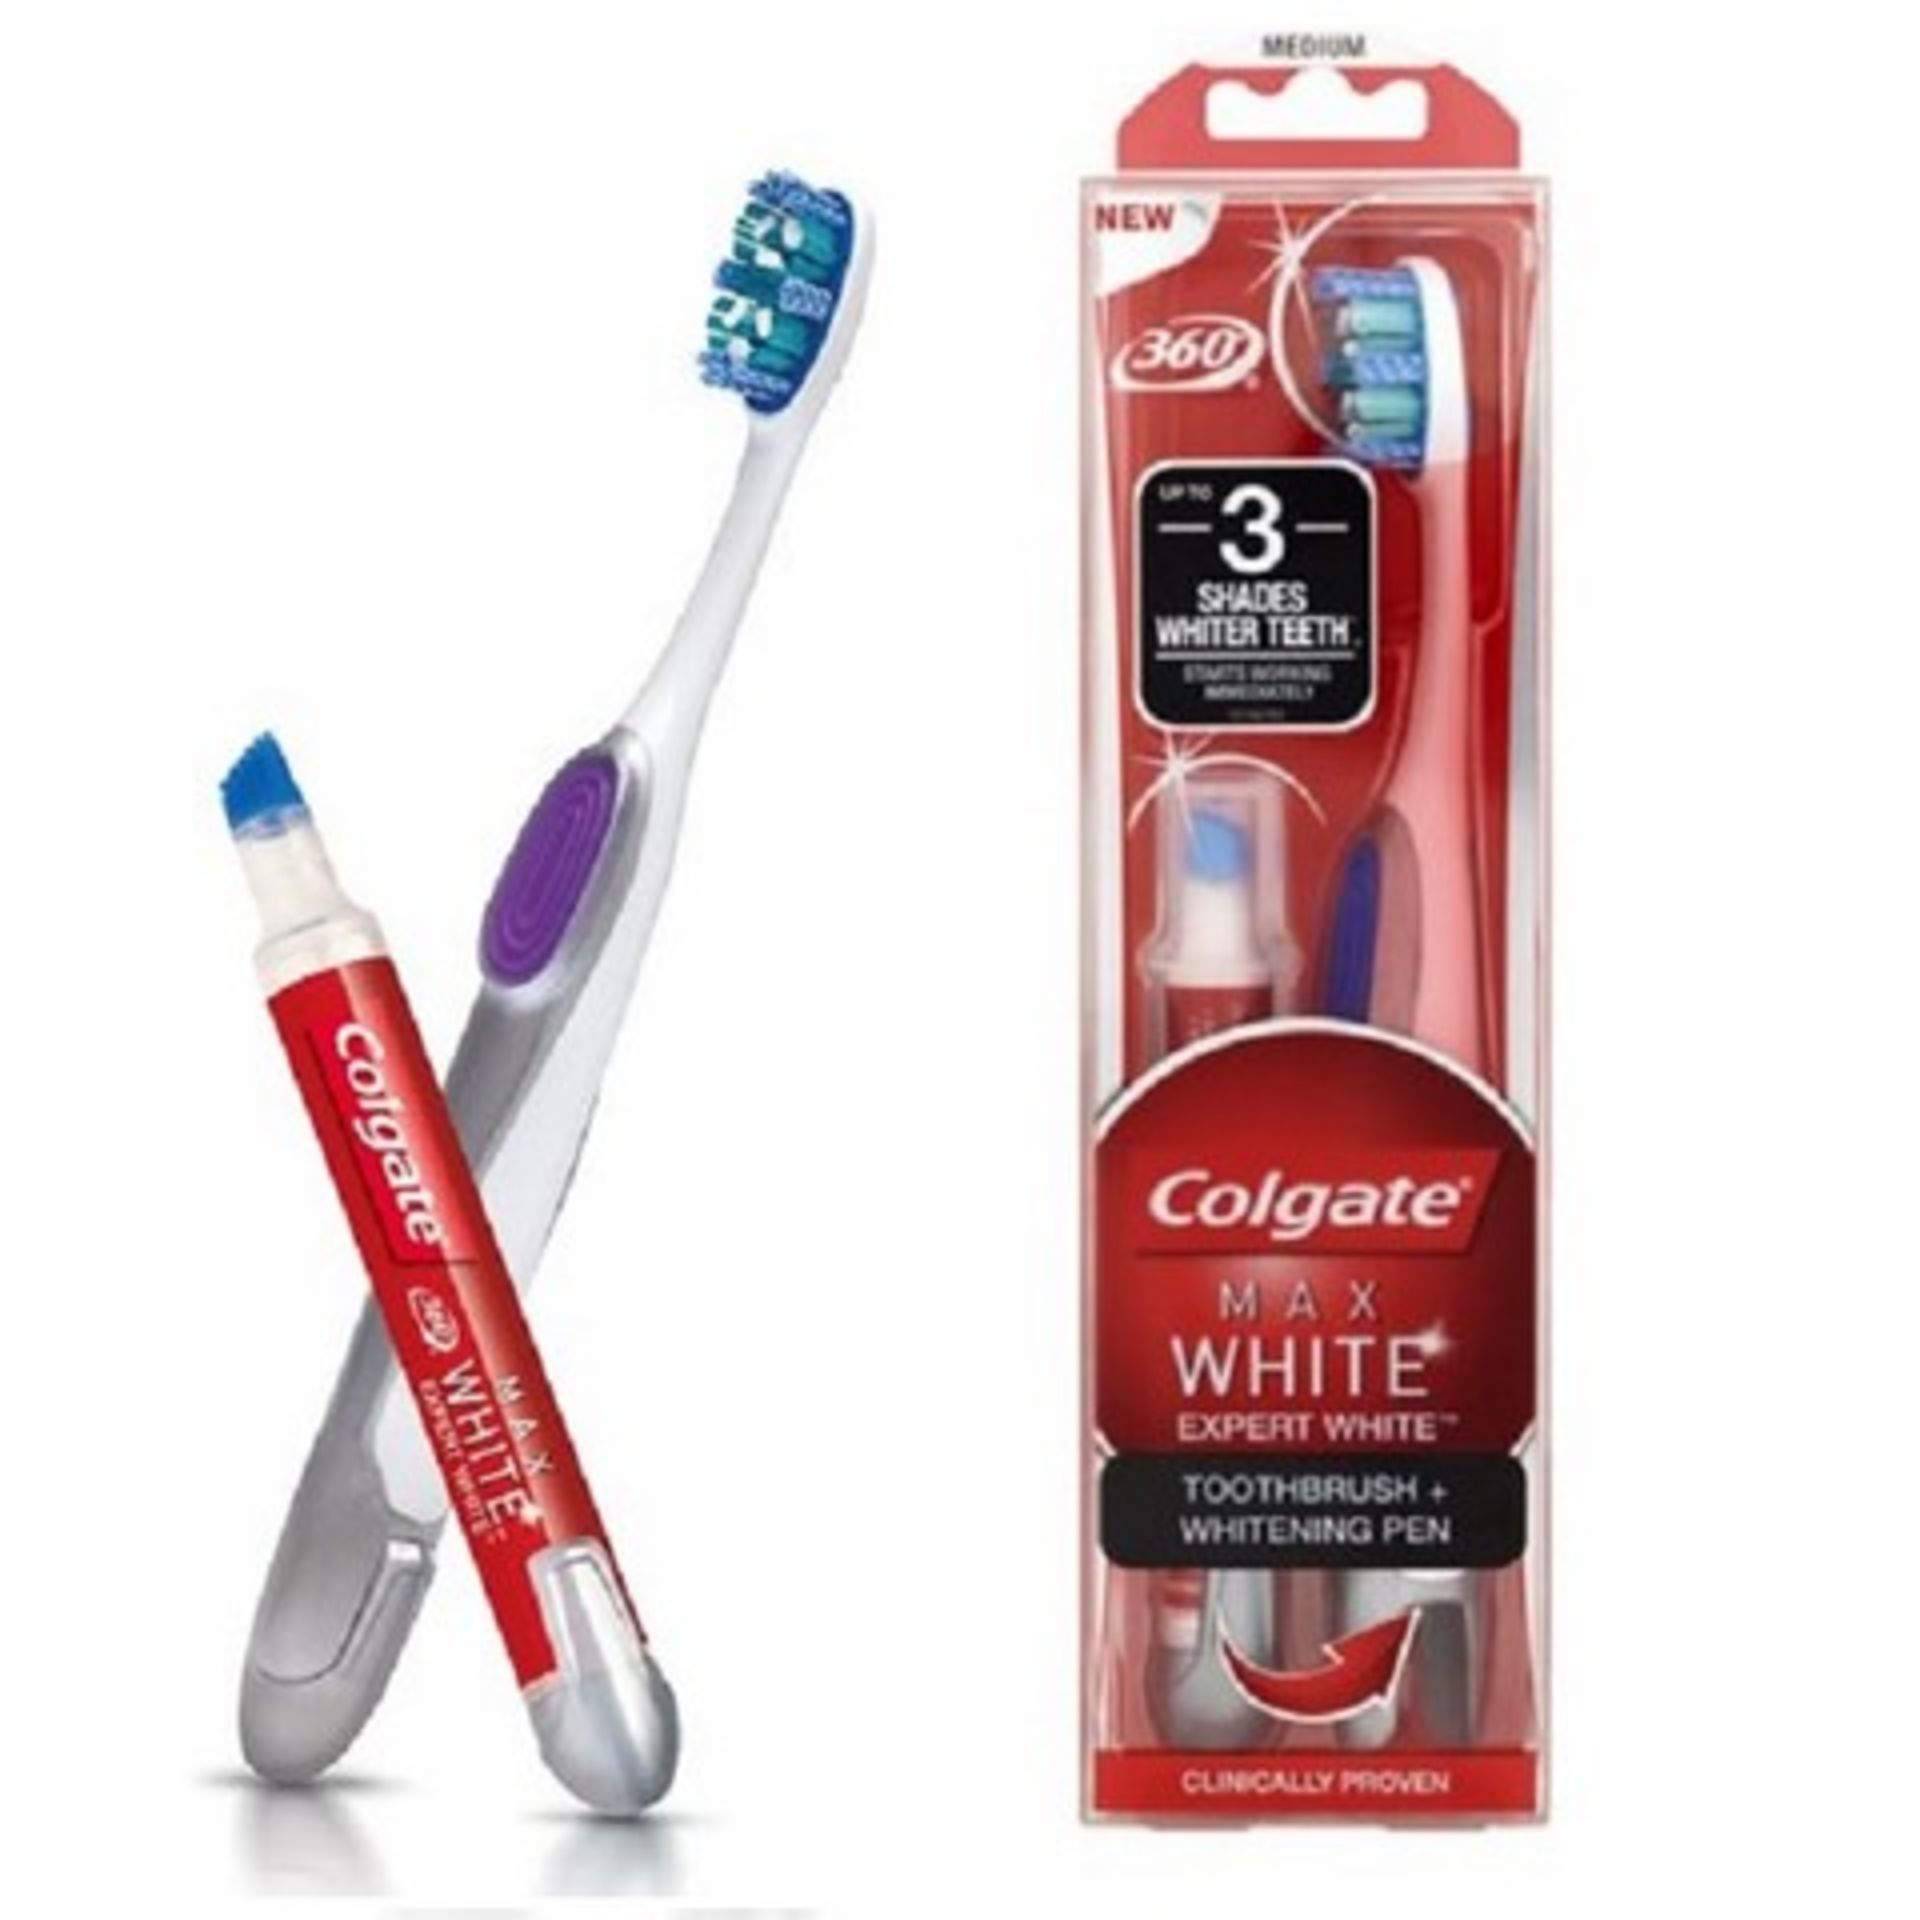 V Brand New Colgate (£12.50 Supermarket Price) Max White Expert White Toothbrush and Whitening Pen - Image 2 of 2